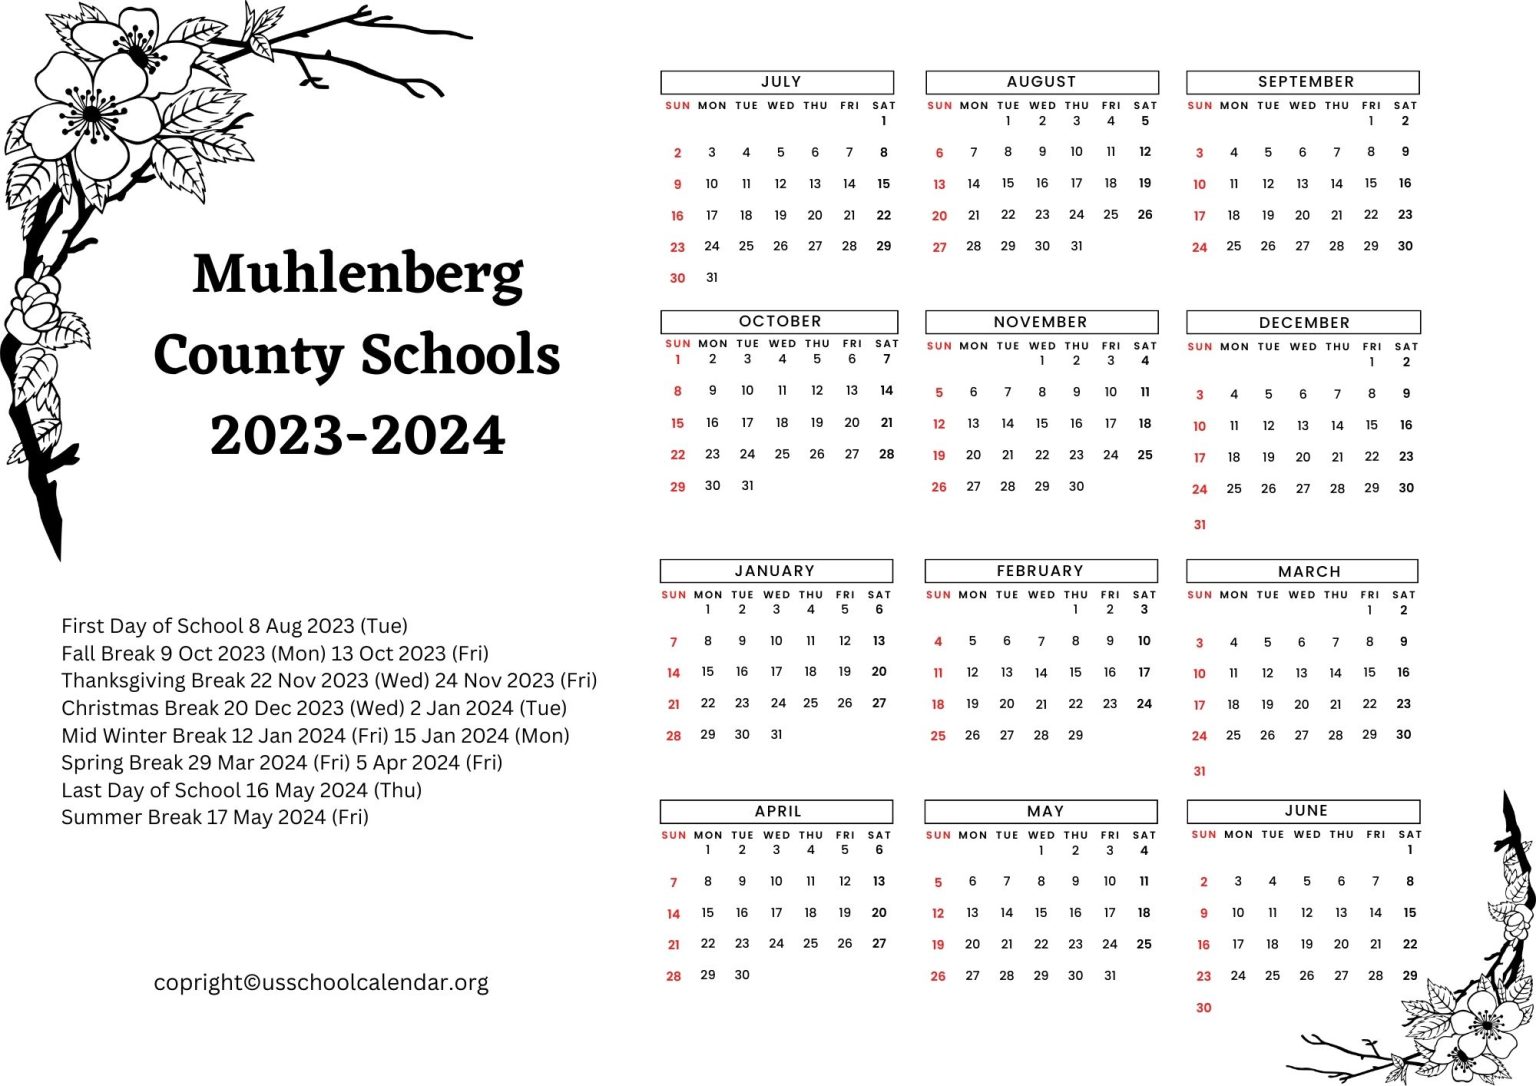 Muhlenberg County Schools Calendar with Holidays 2023 2024